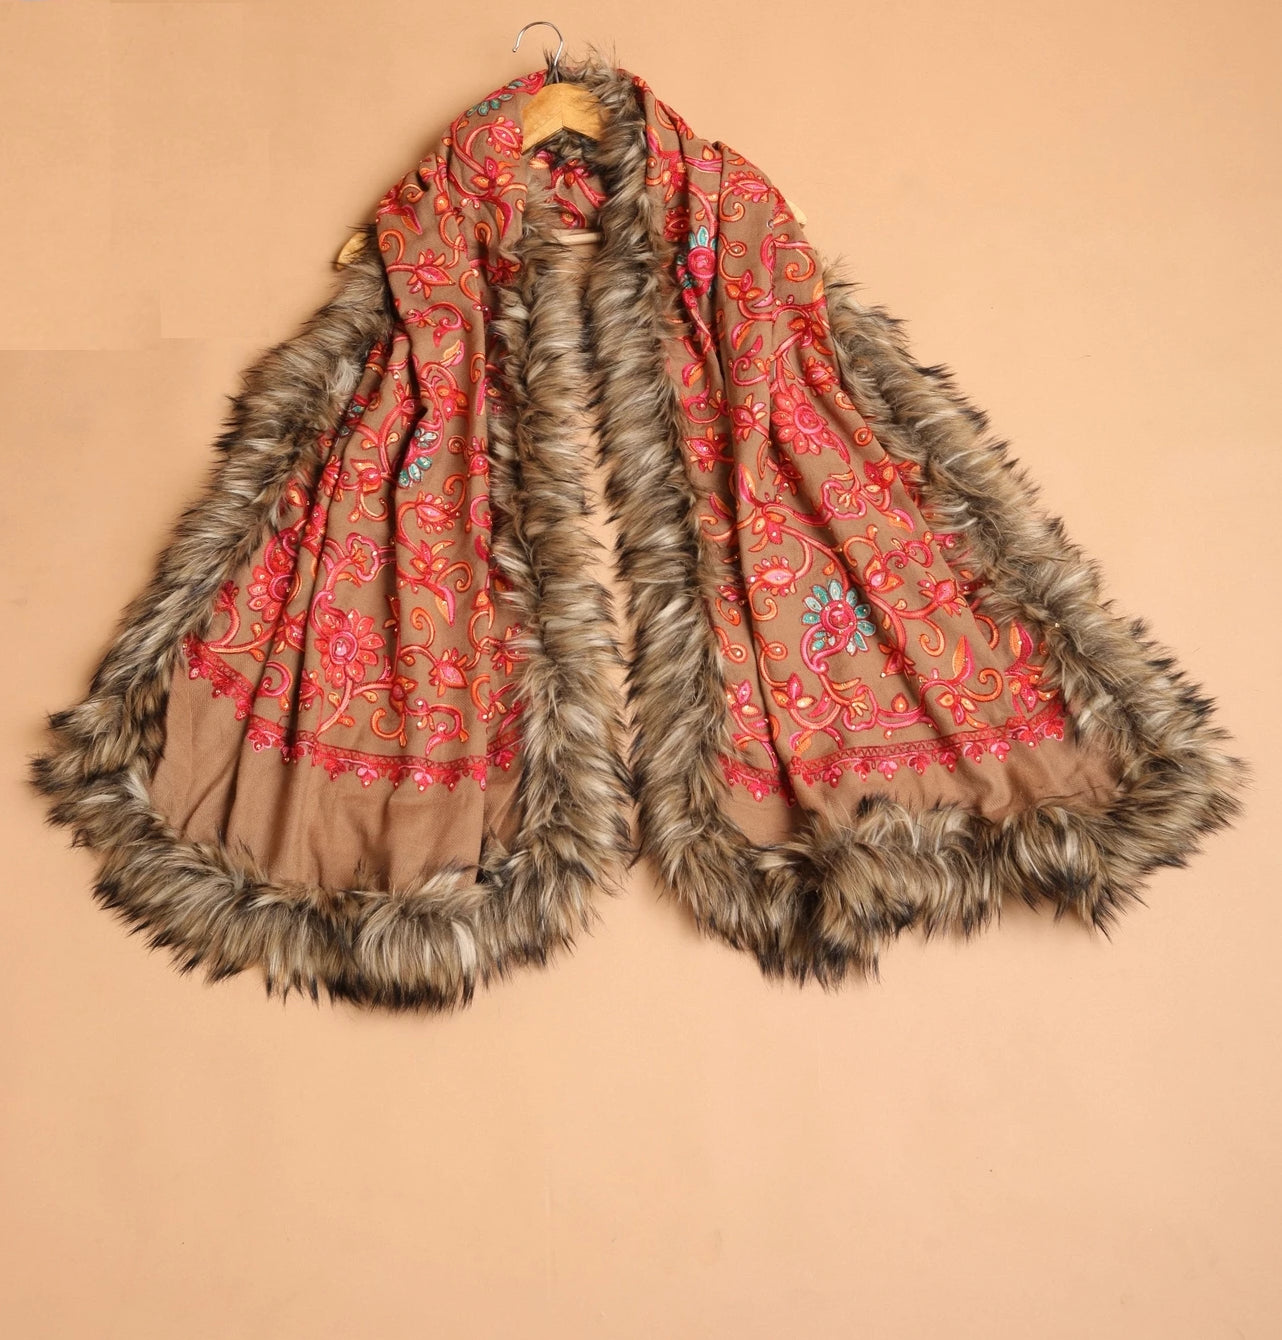 Embellished Embroidery Faux Fur Pashmina Shawl - The Pashm